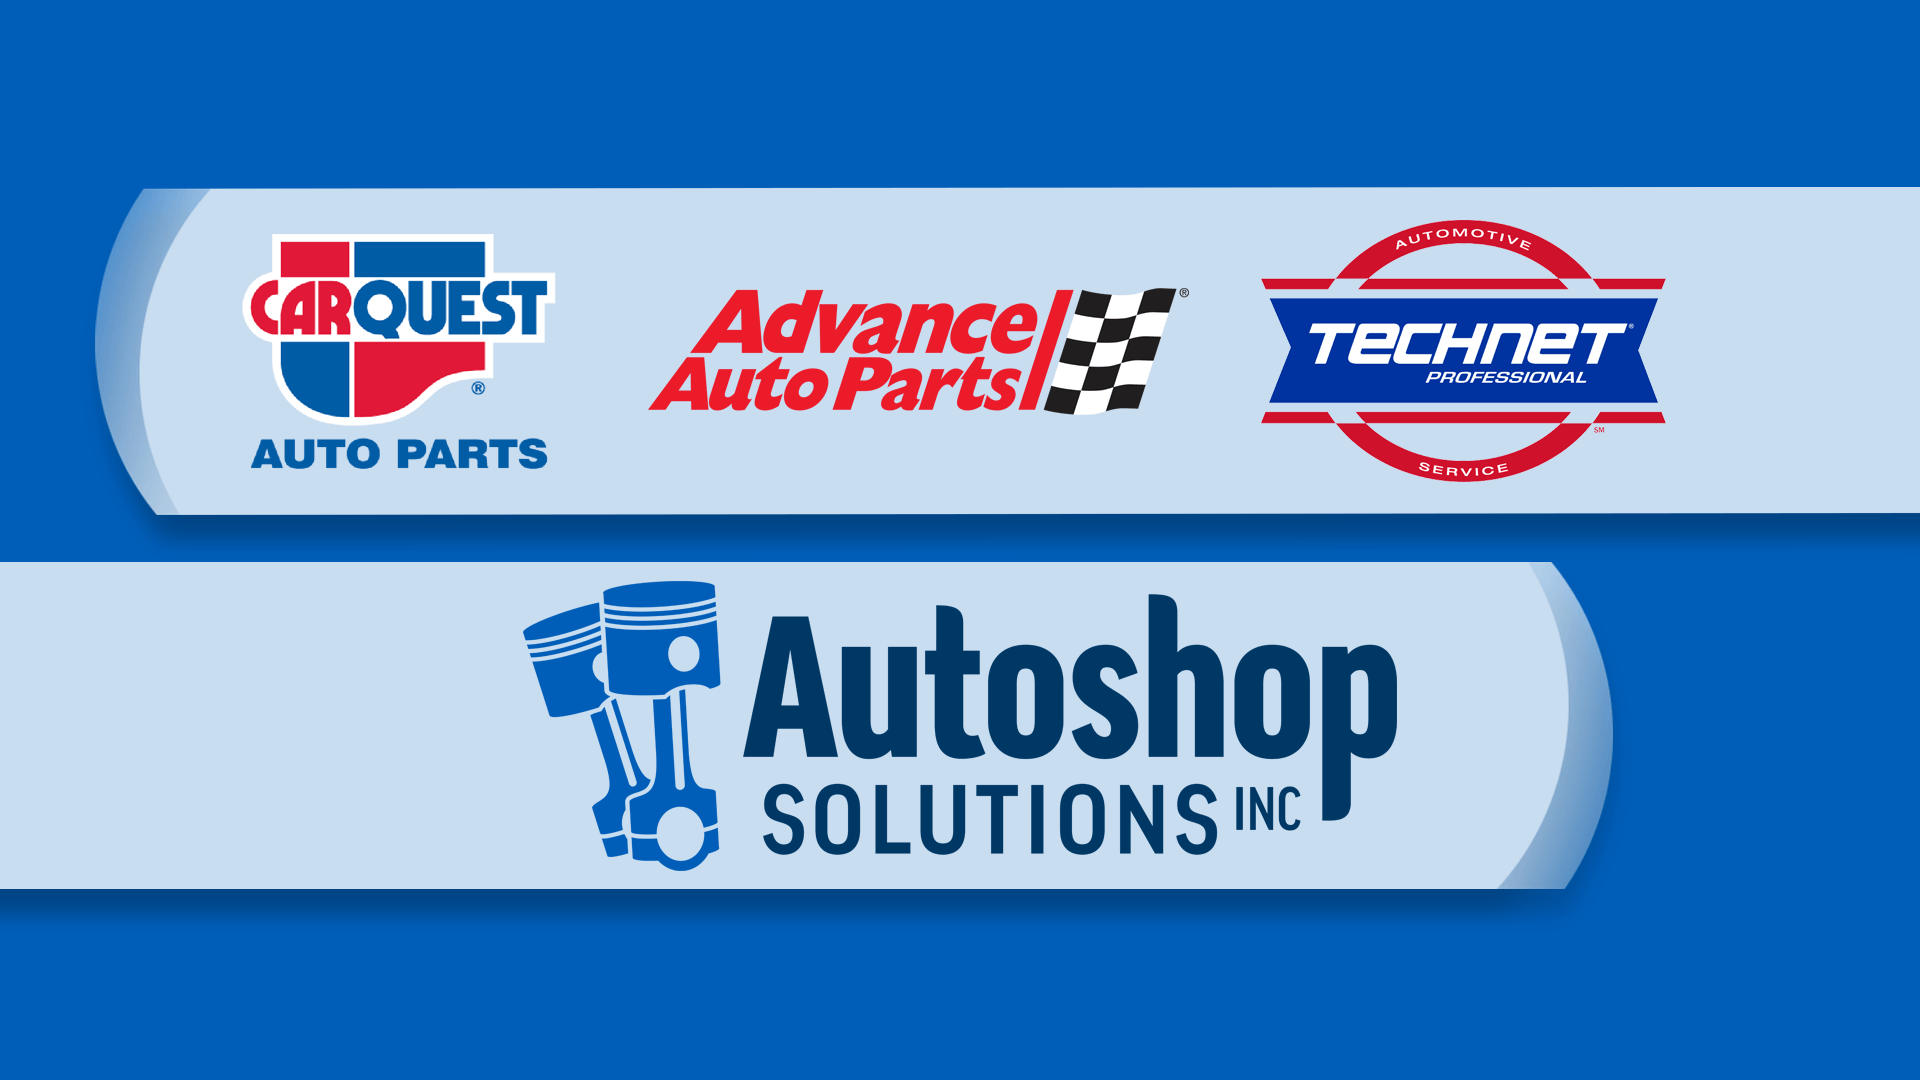 TechNet Auto Service Logo - Autoshop Solutions Partners With TechNet | Industry Associations